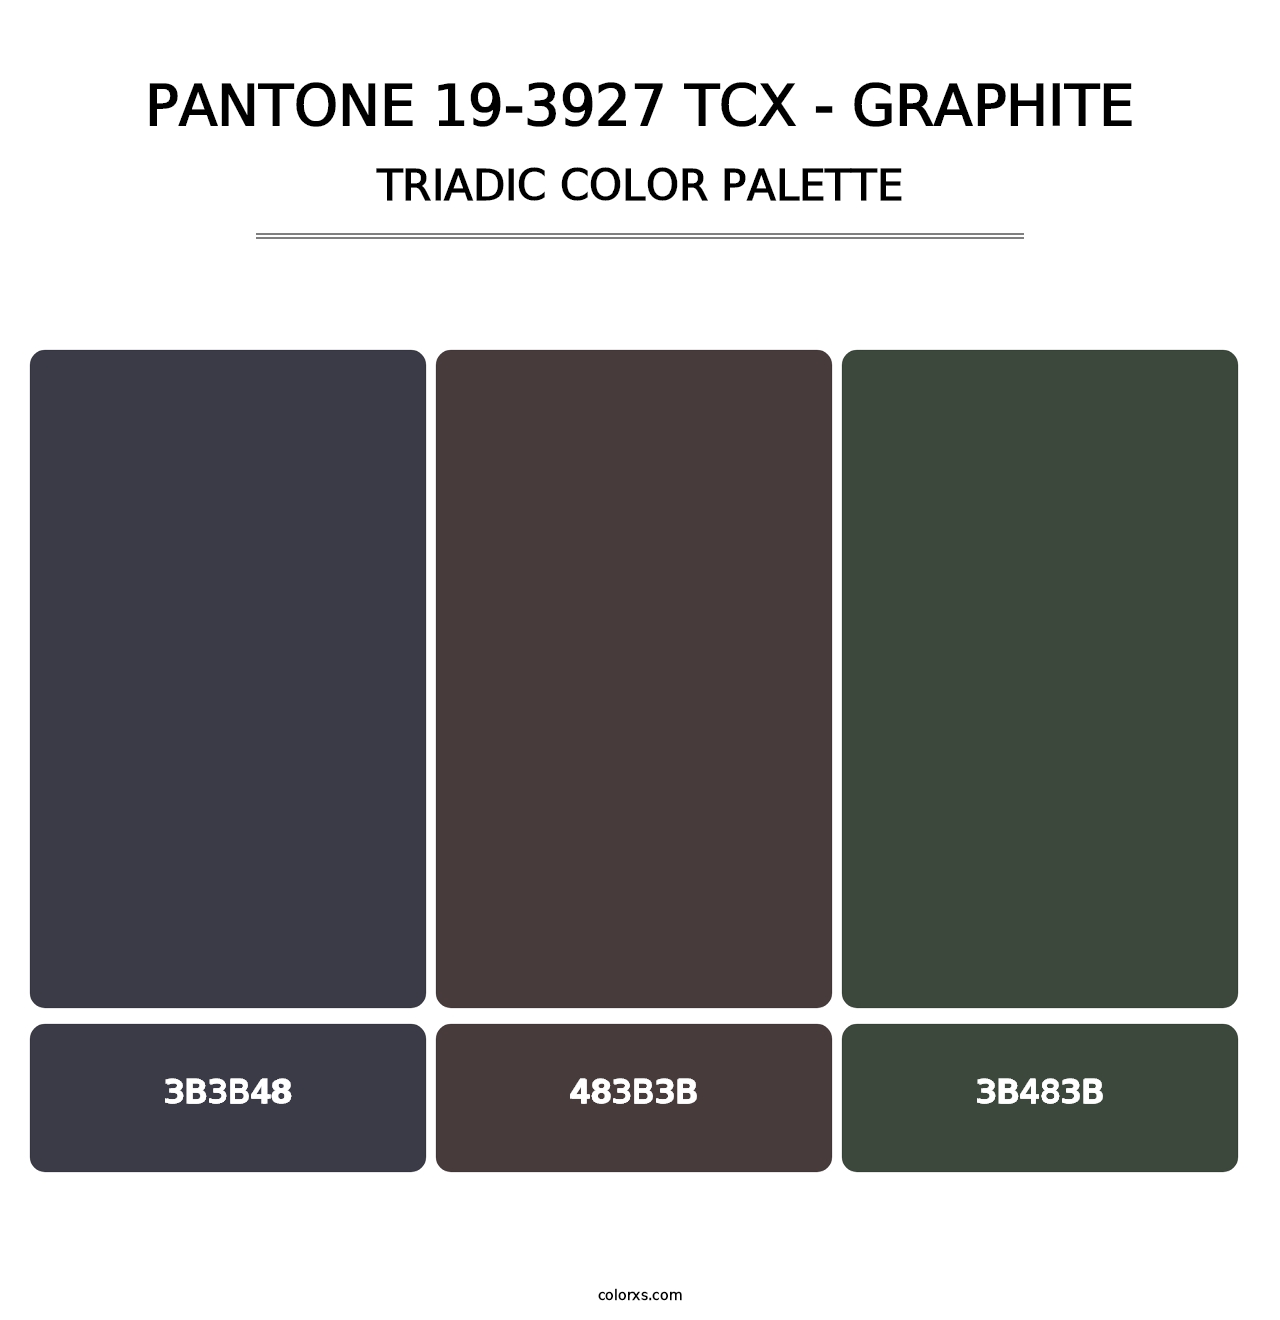 PANTONE 19-3927 TCX - Graphite - Triadic Color Palette